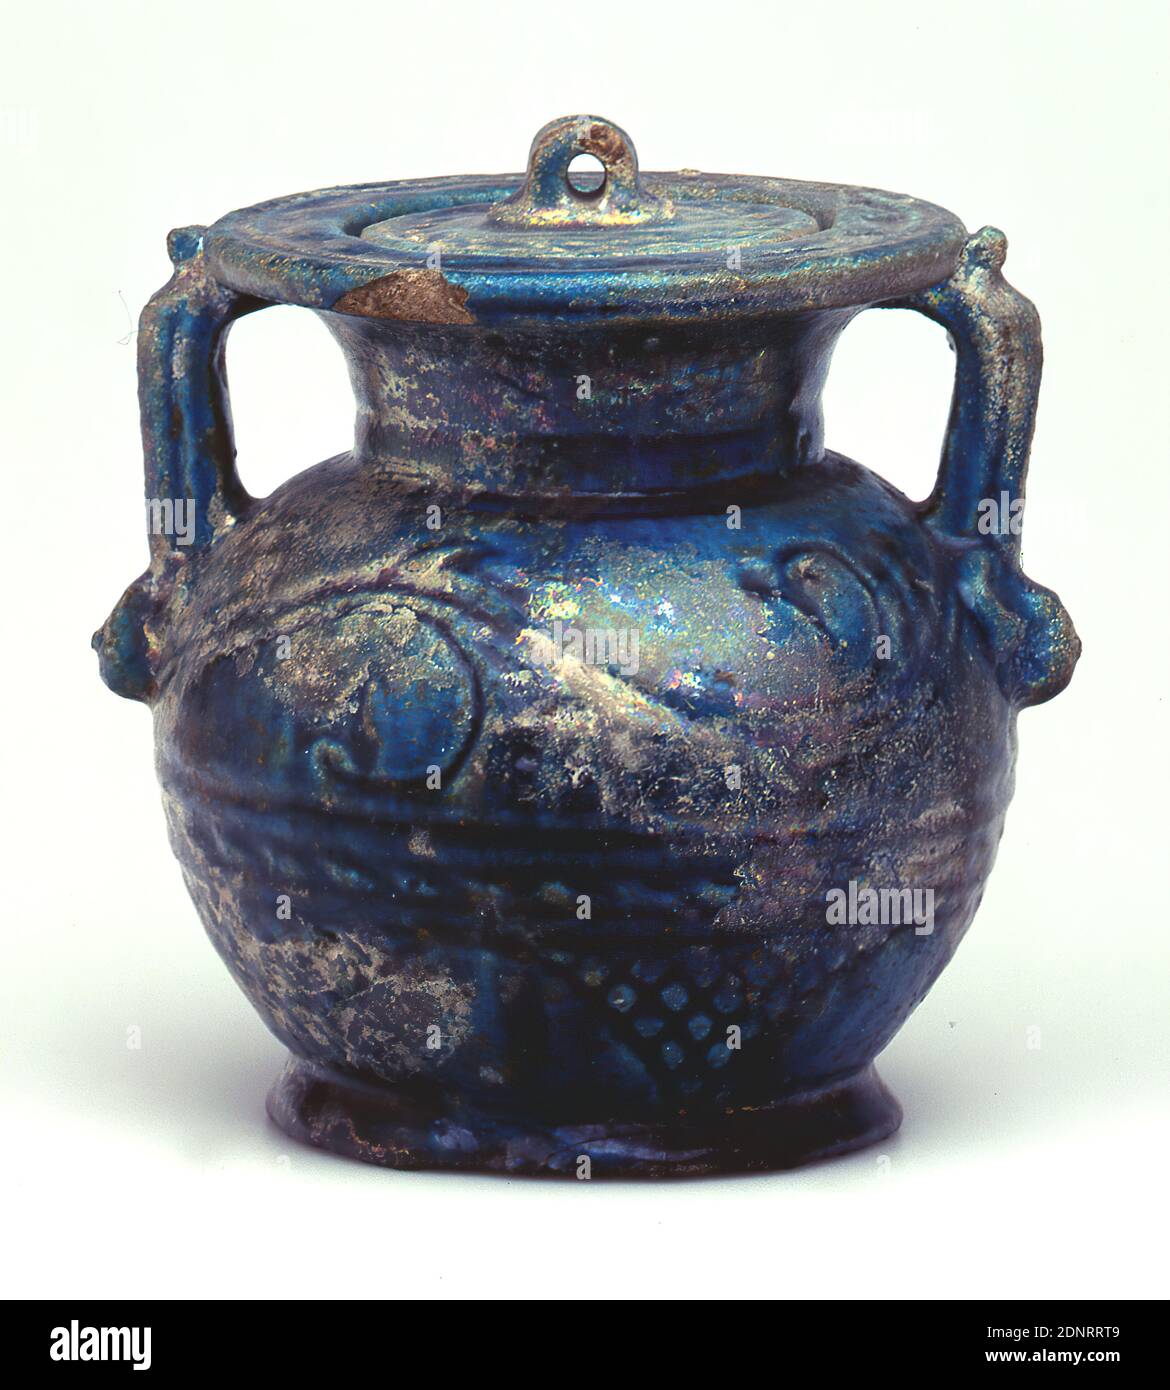 Amphora, faience, fired (ceramic), quartz frit ('faience'), Total: Height:  17.3 cm; Diameter: 14.8 cm; Muzzle diameter: 12.6 cm, grave goods,  ornaments, antiquity, The small-format vessel has a deep blue-green  iridescent glaze. Ornaments